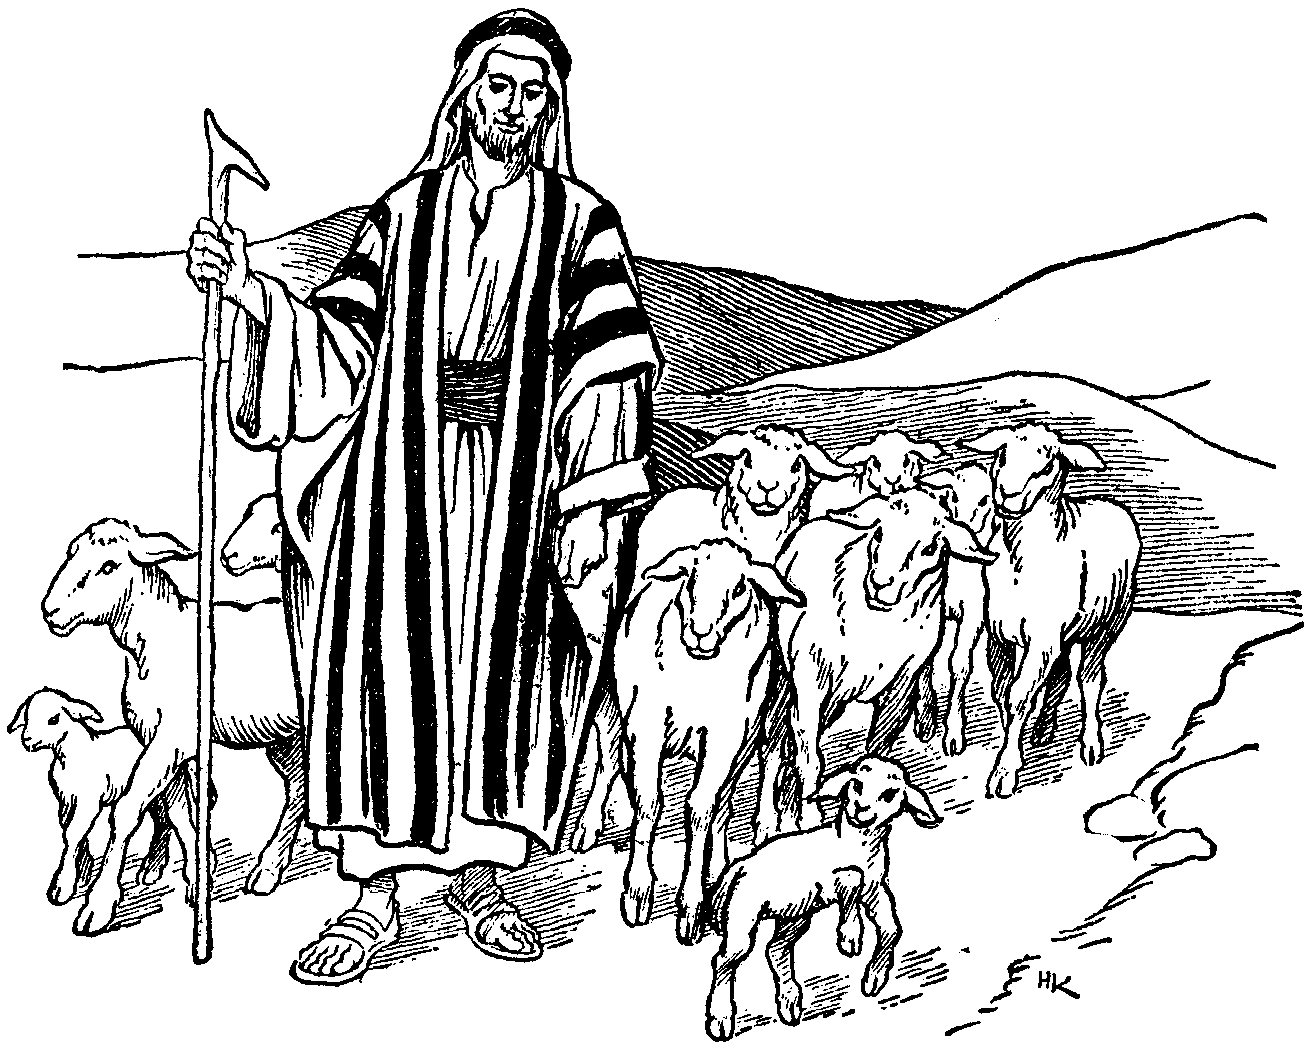 The Good Shepherd 2 - by sama